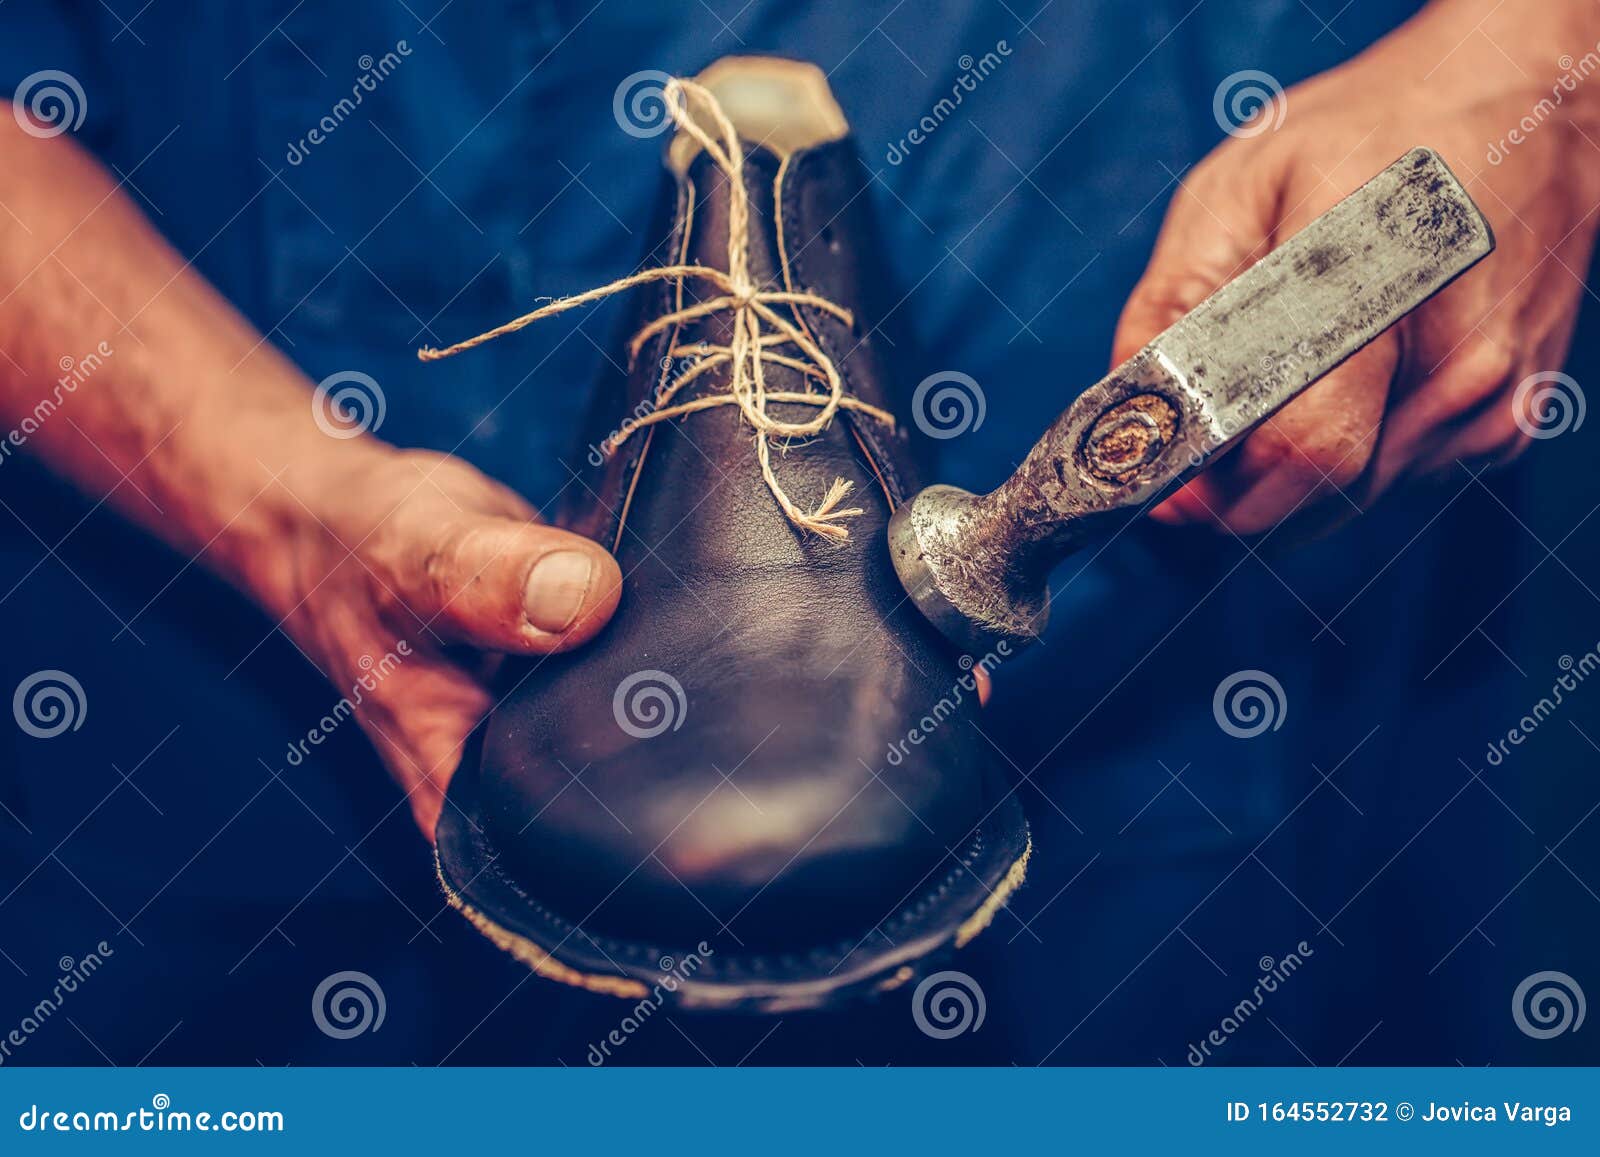 shoe making business